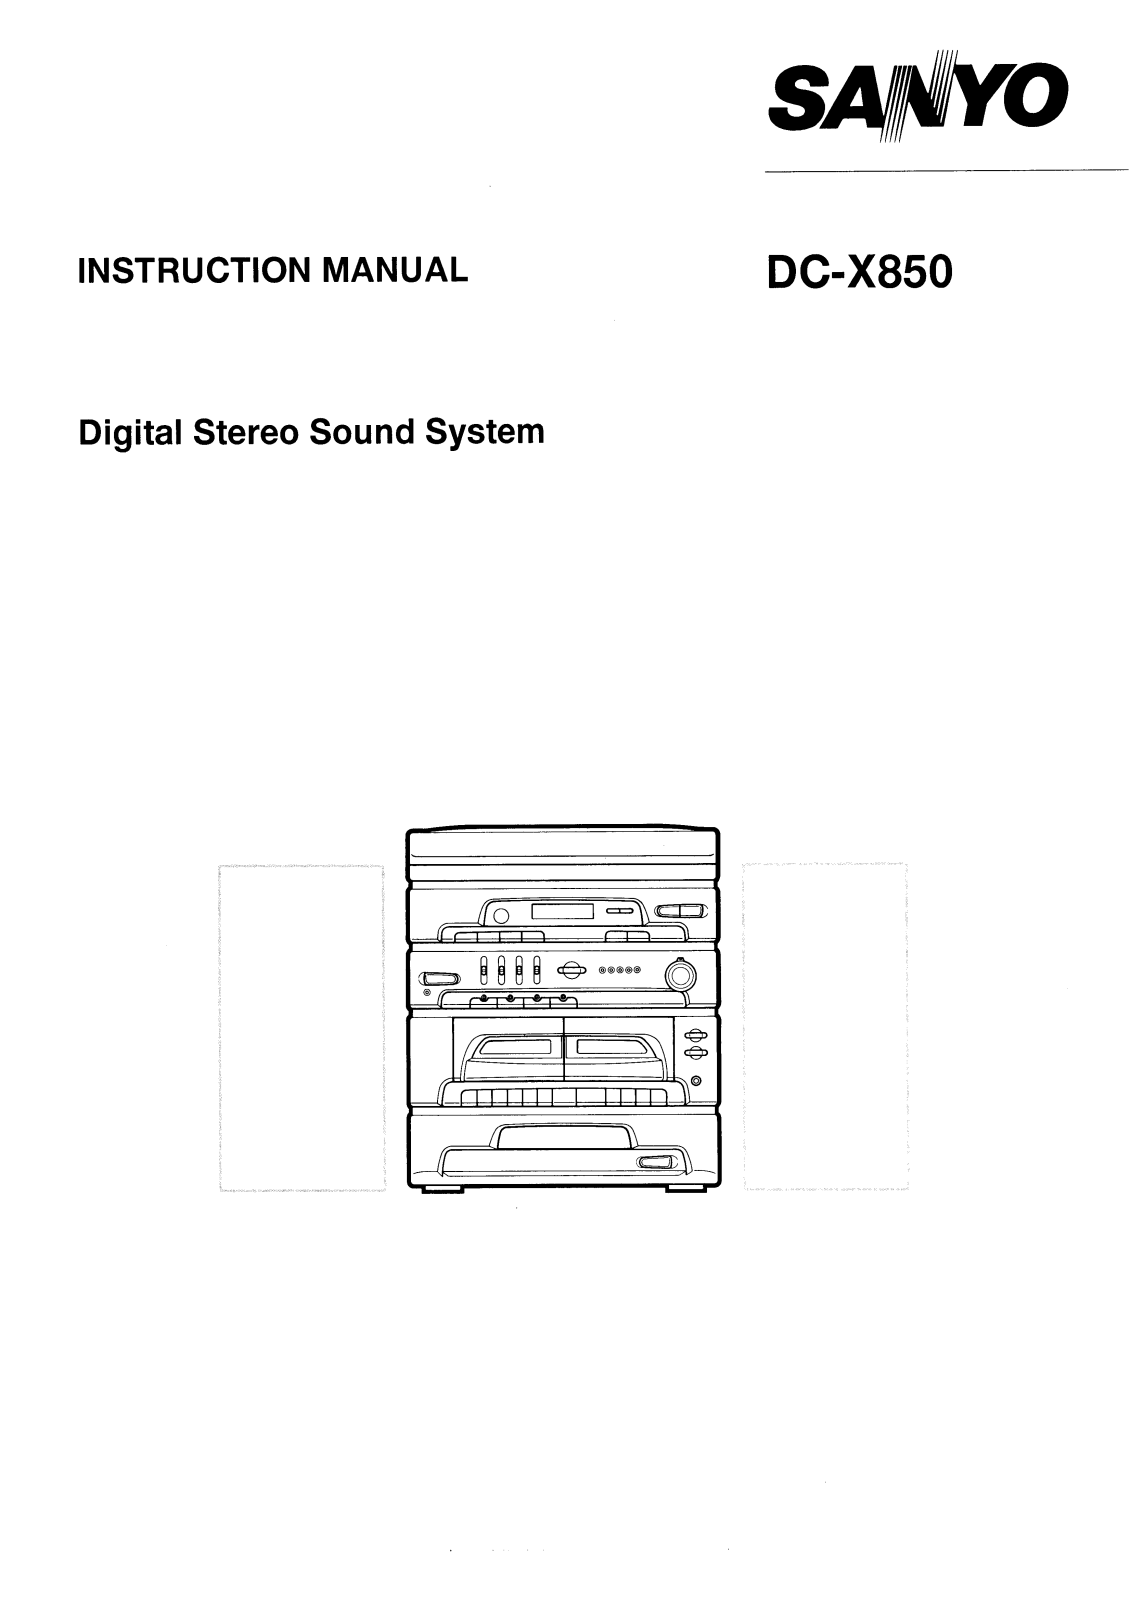 Sanyo DC-X850 Instruction Manual